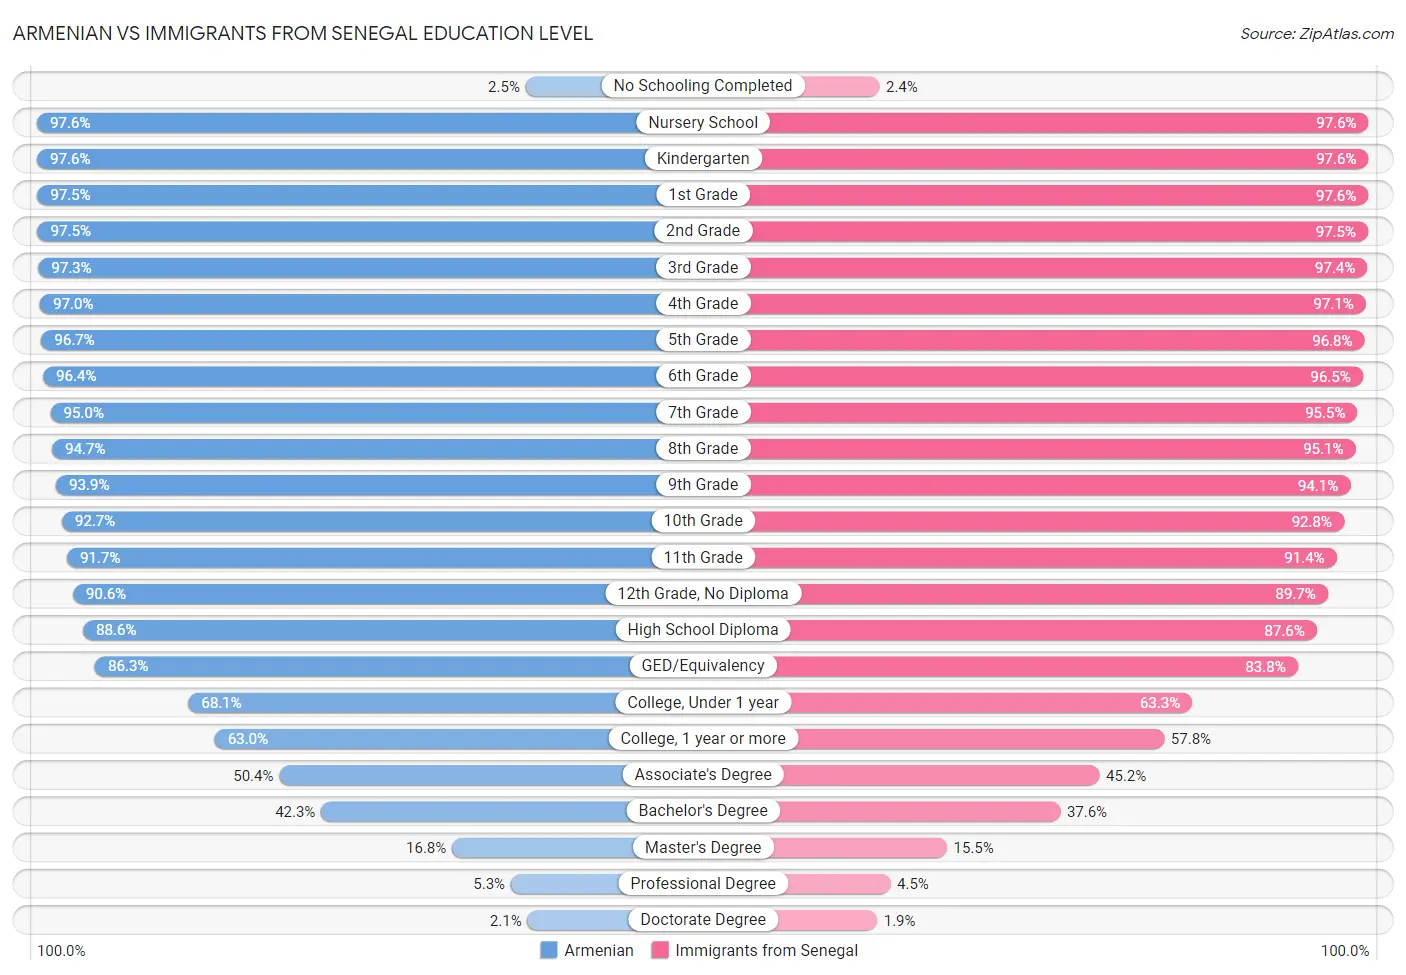 Armenian vs Immigrants from Senegal Education Level